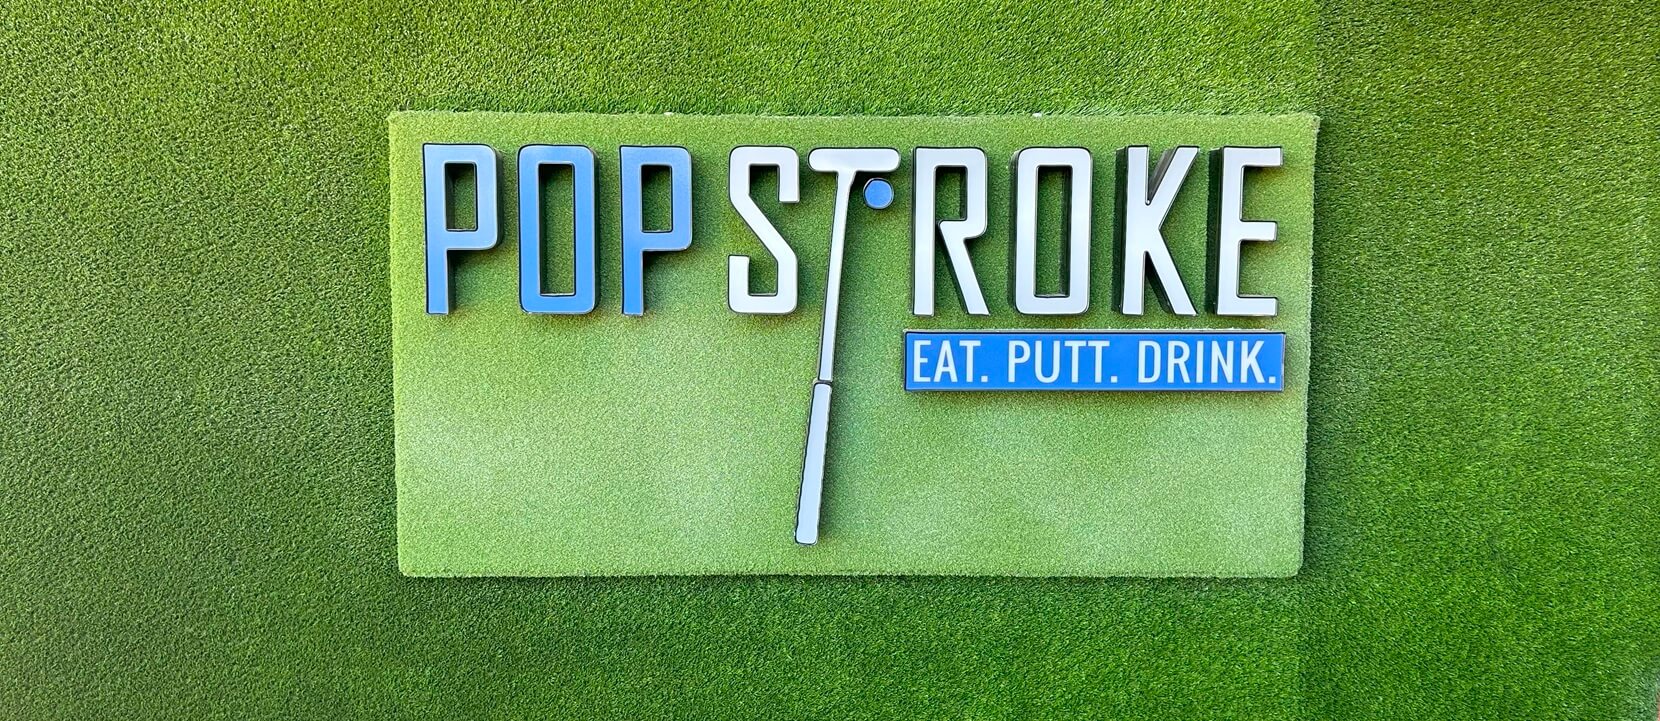 Pop Stroke Scottsdale AZ sign near bar